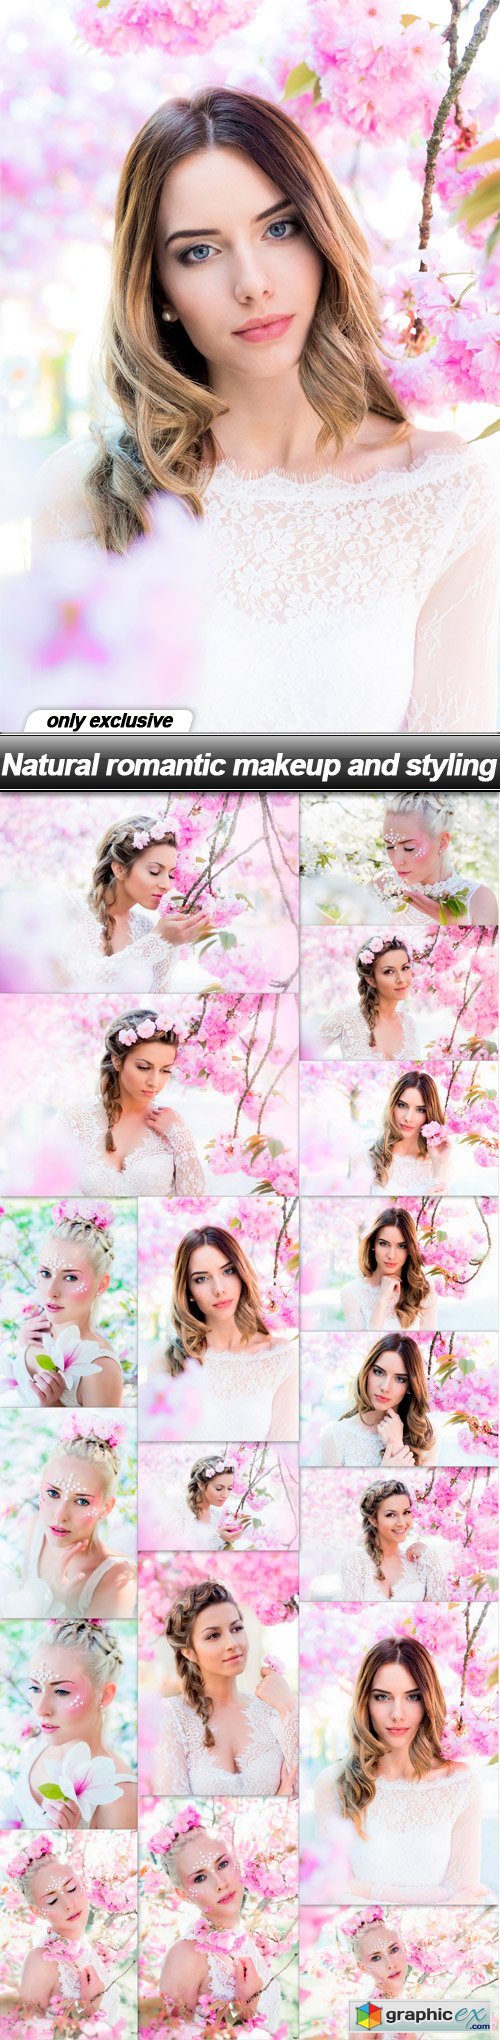 Natural romantic makeup and styling - 18 UHQ JPEG